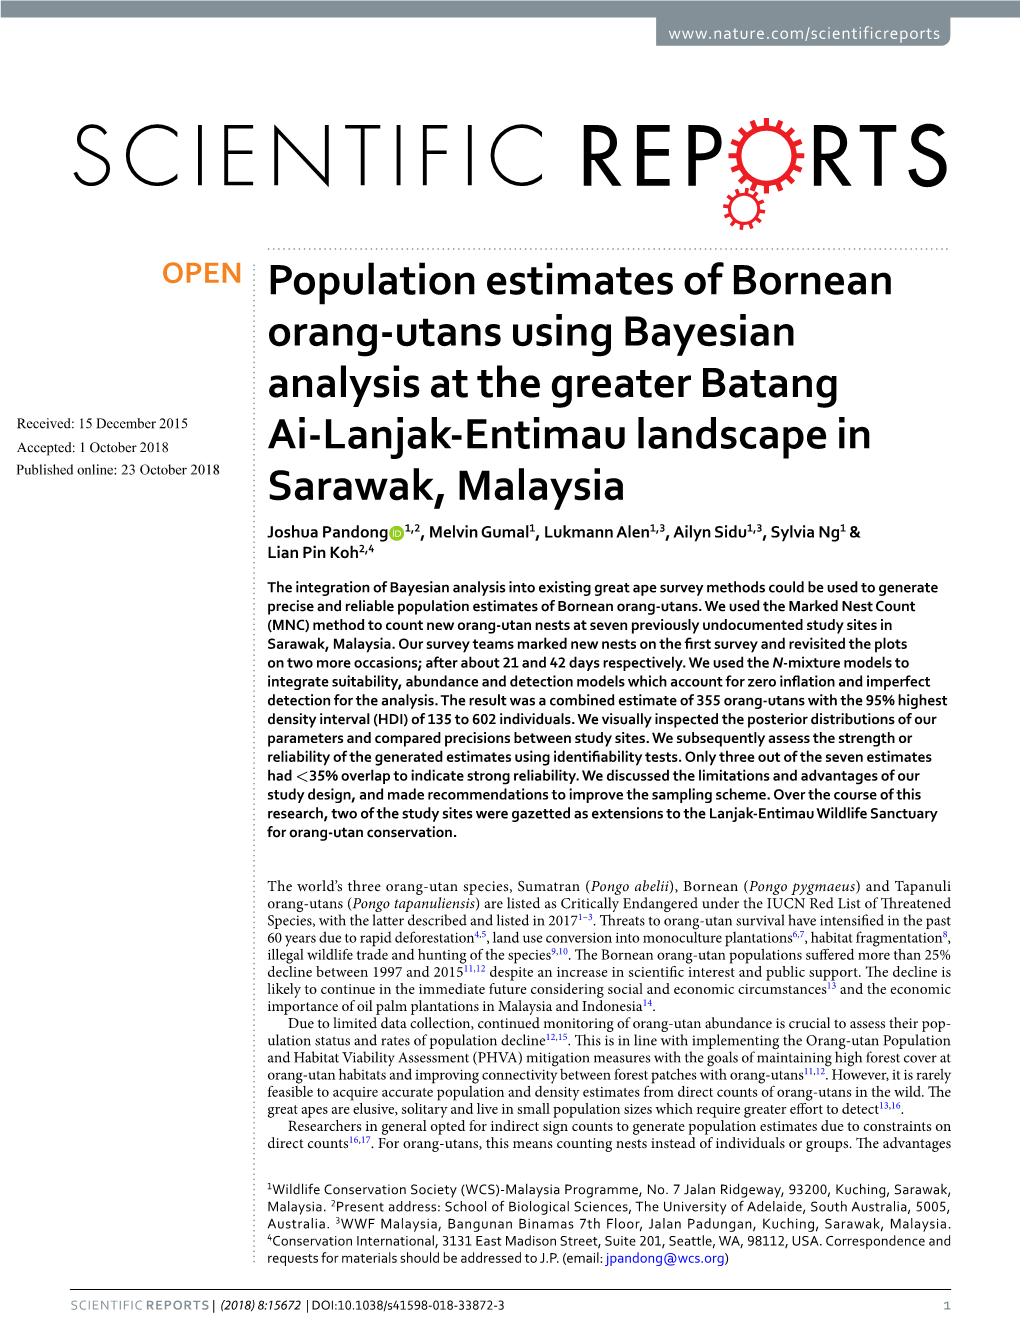 Population Estimates of Bornean Orang-Utans Using Bayesian Analysis at the Greater Batang Ai-Lanjak-Entimau Landscape in Sarawak